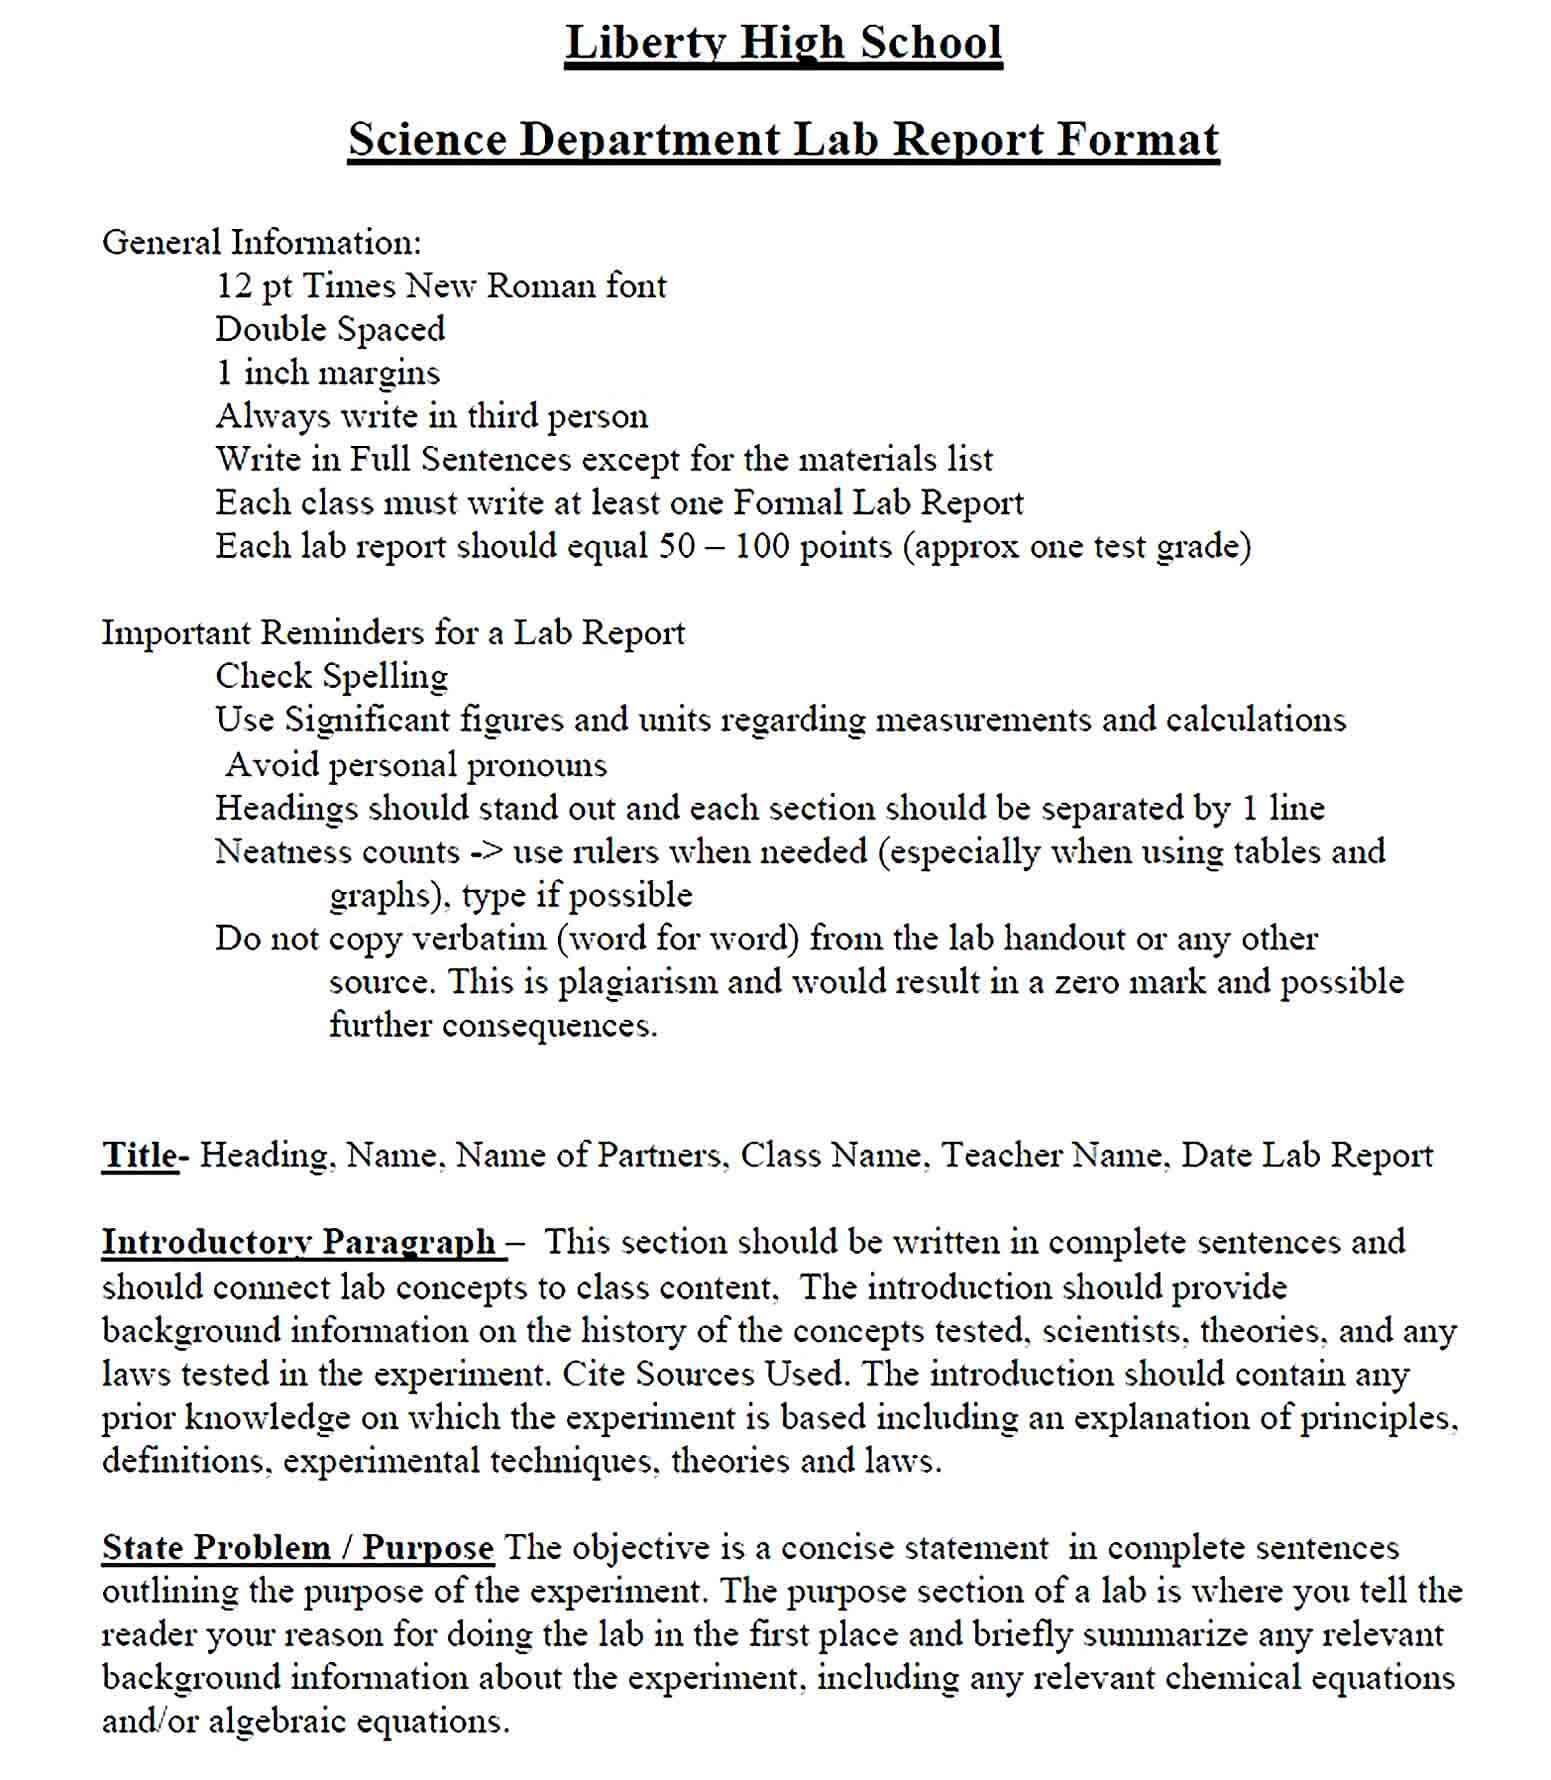 Sample Science Department Lab Report Format